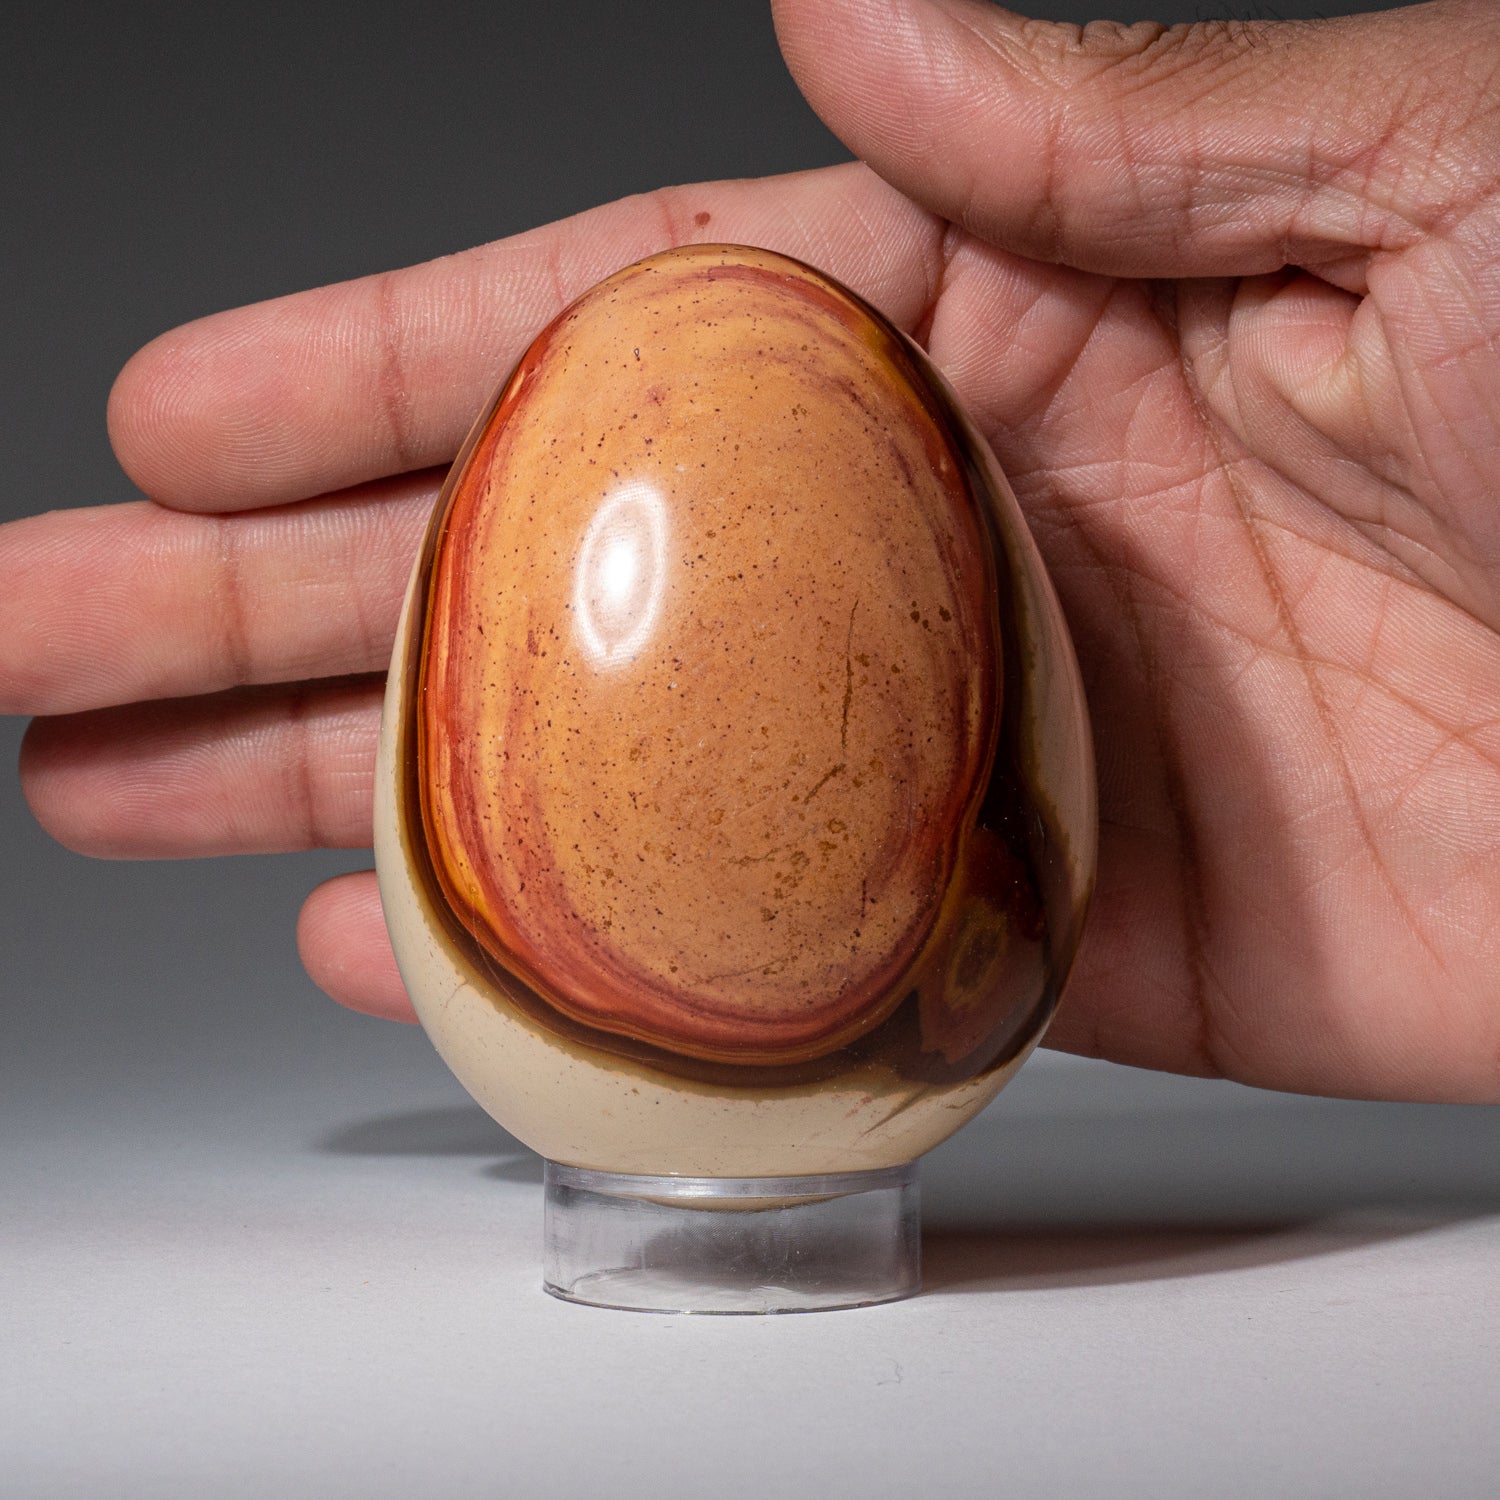 Genuine Polished Polychrome Egg from Madagascar (383.6 grams)